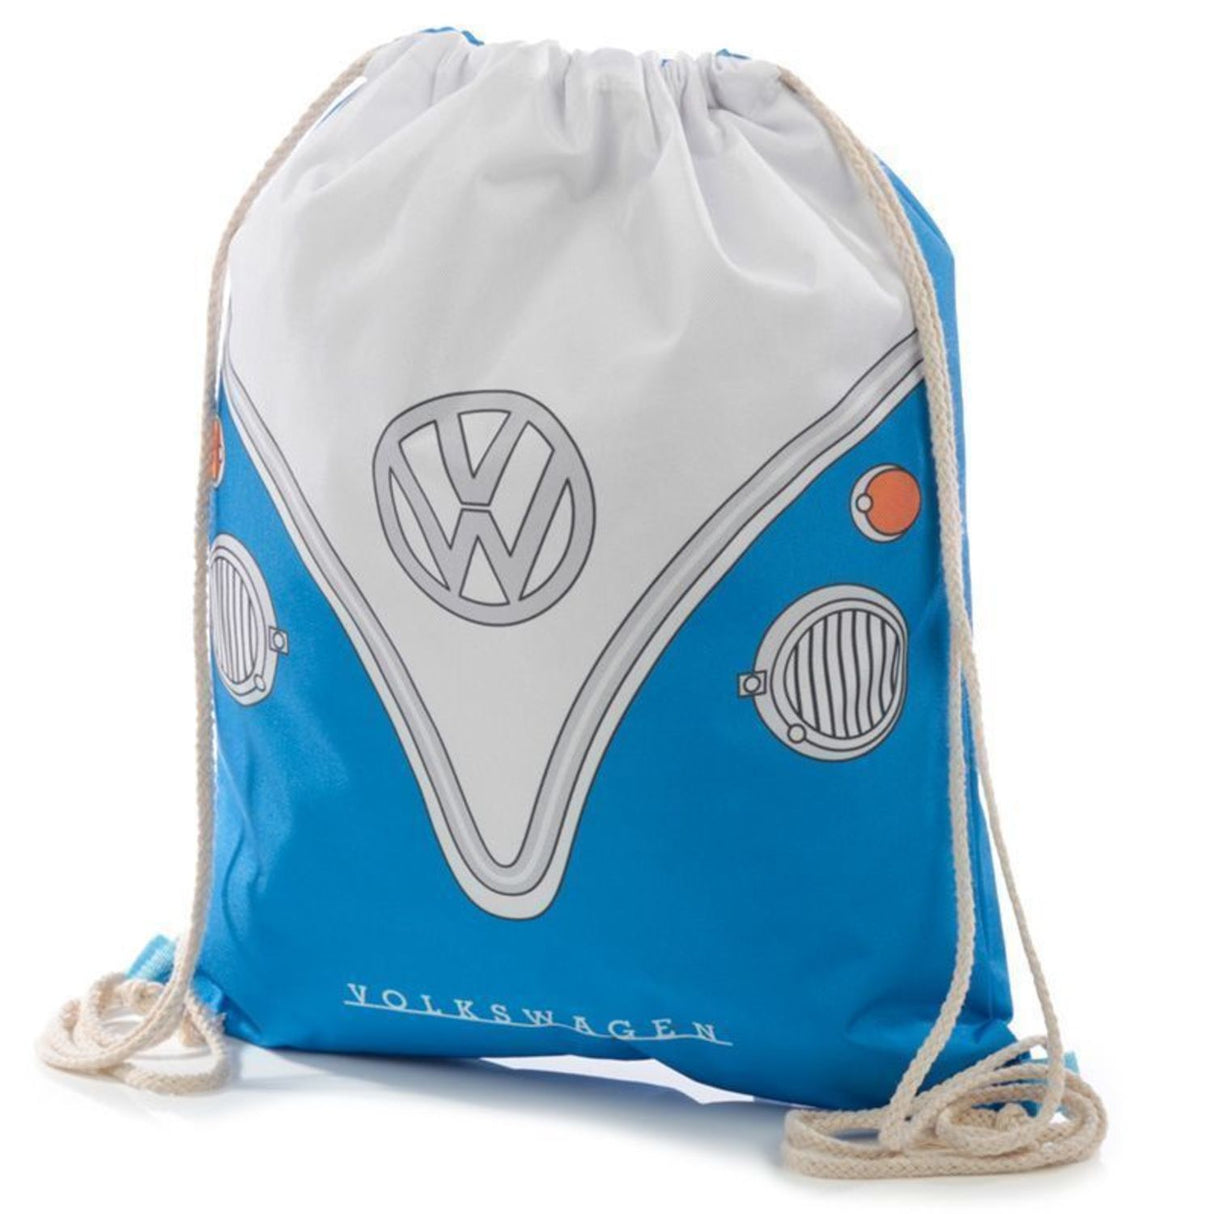 Volkswagen VW T1 Bus Sporttasche in blau